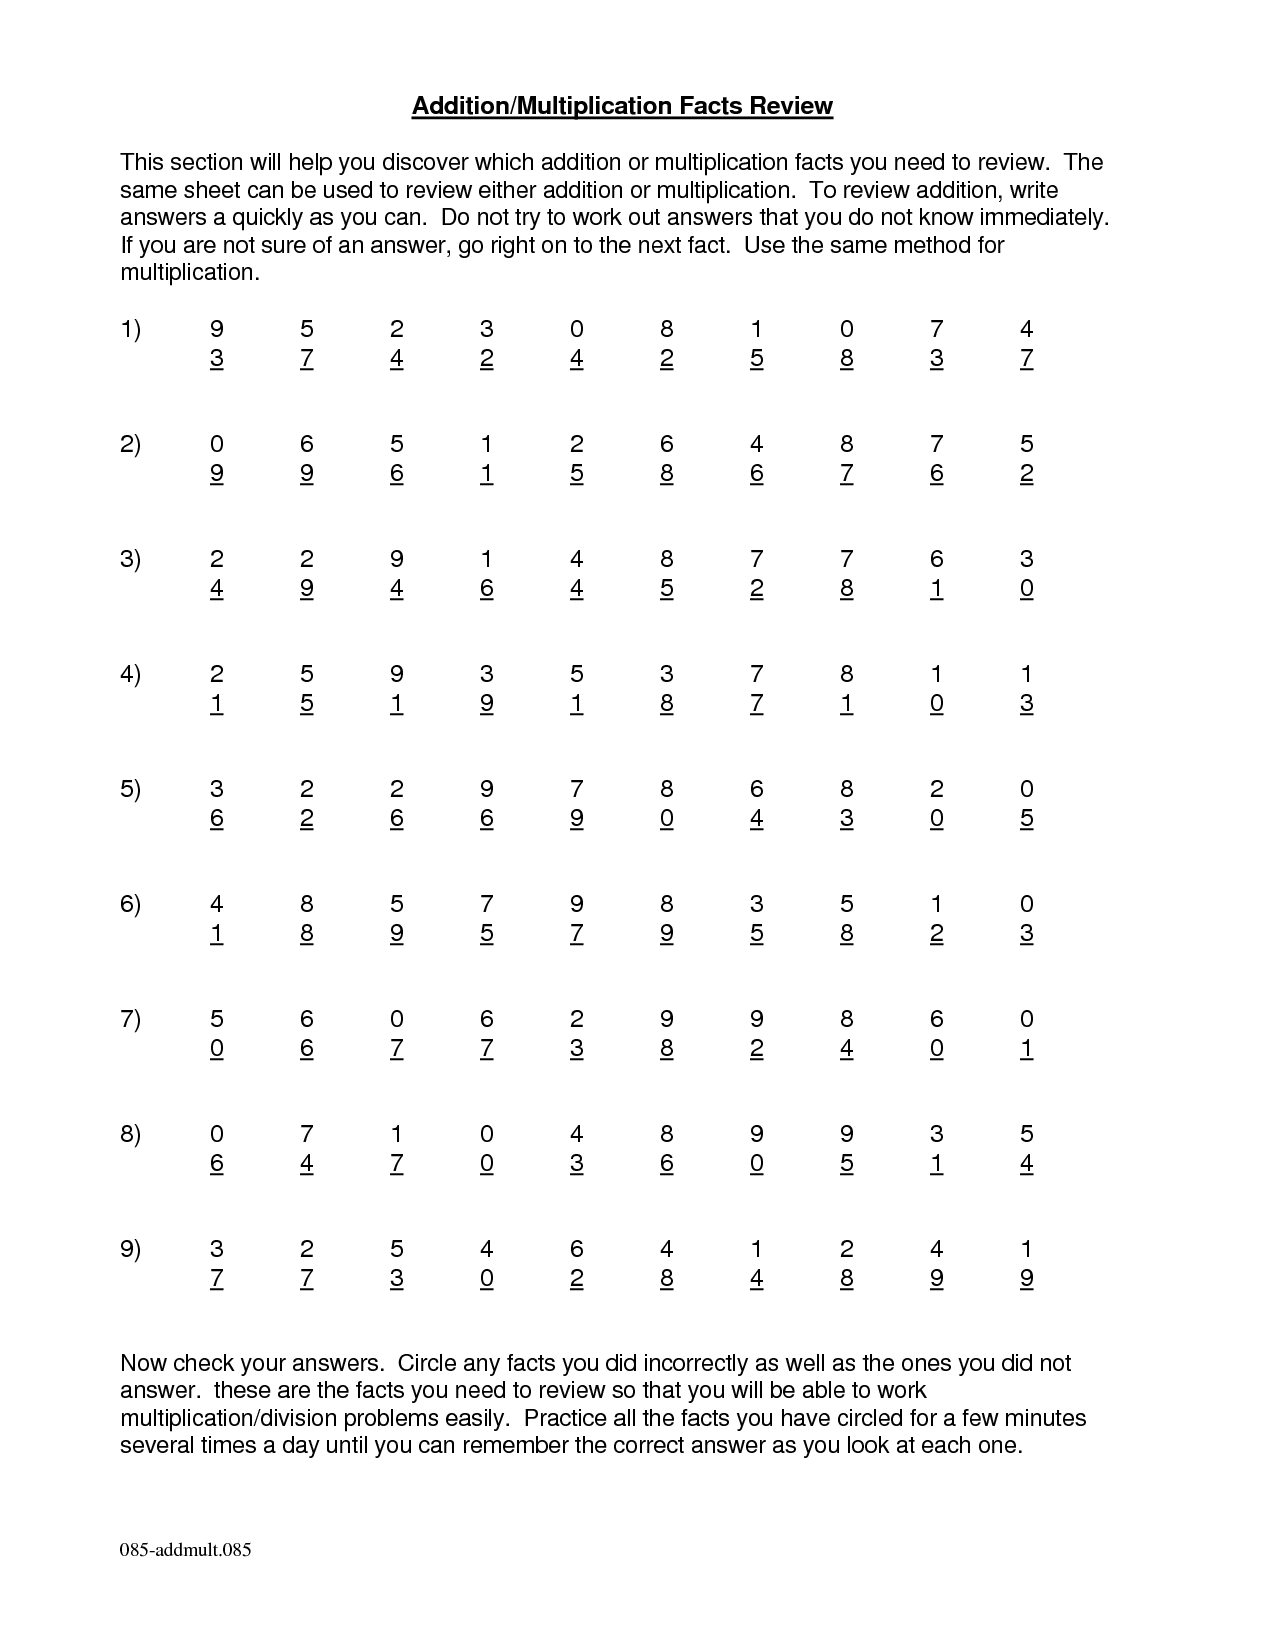 Multiplication Facts Worksheets 3rd Grade Image